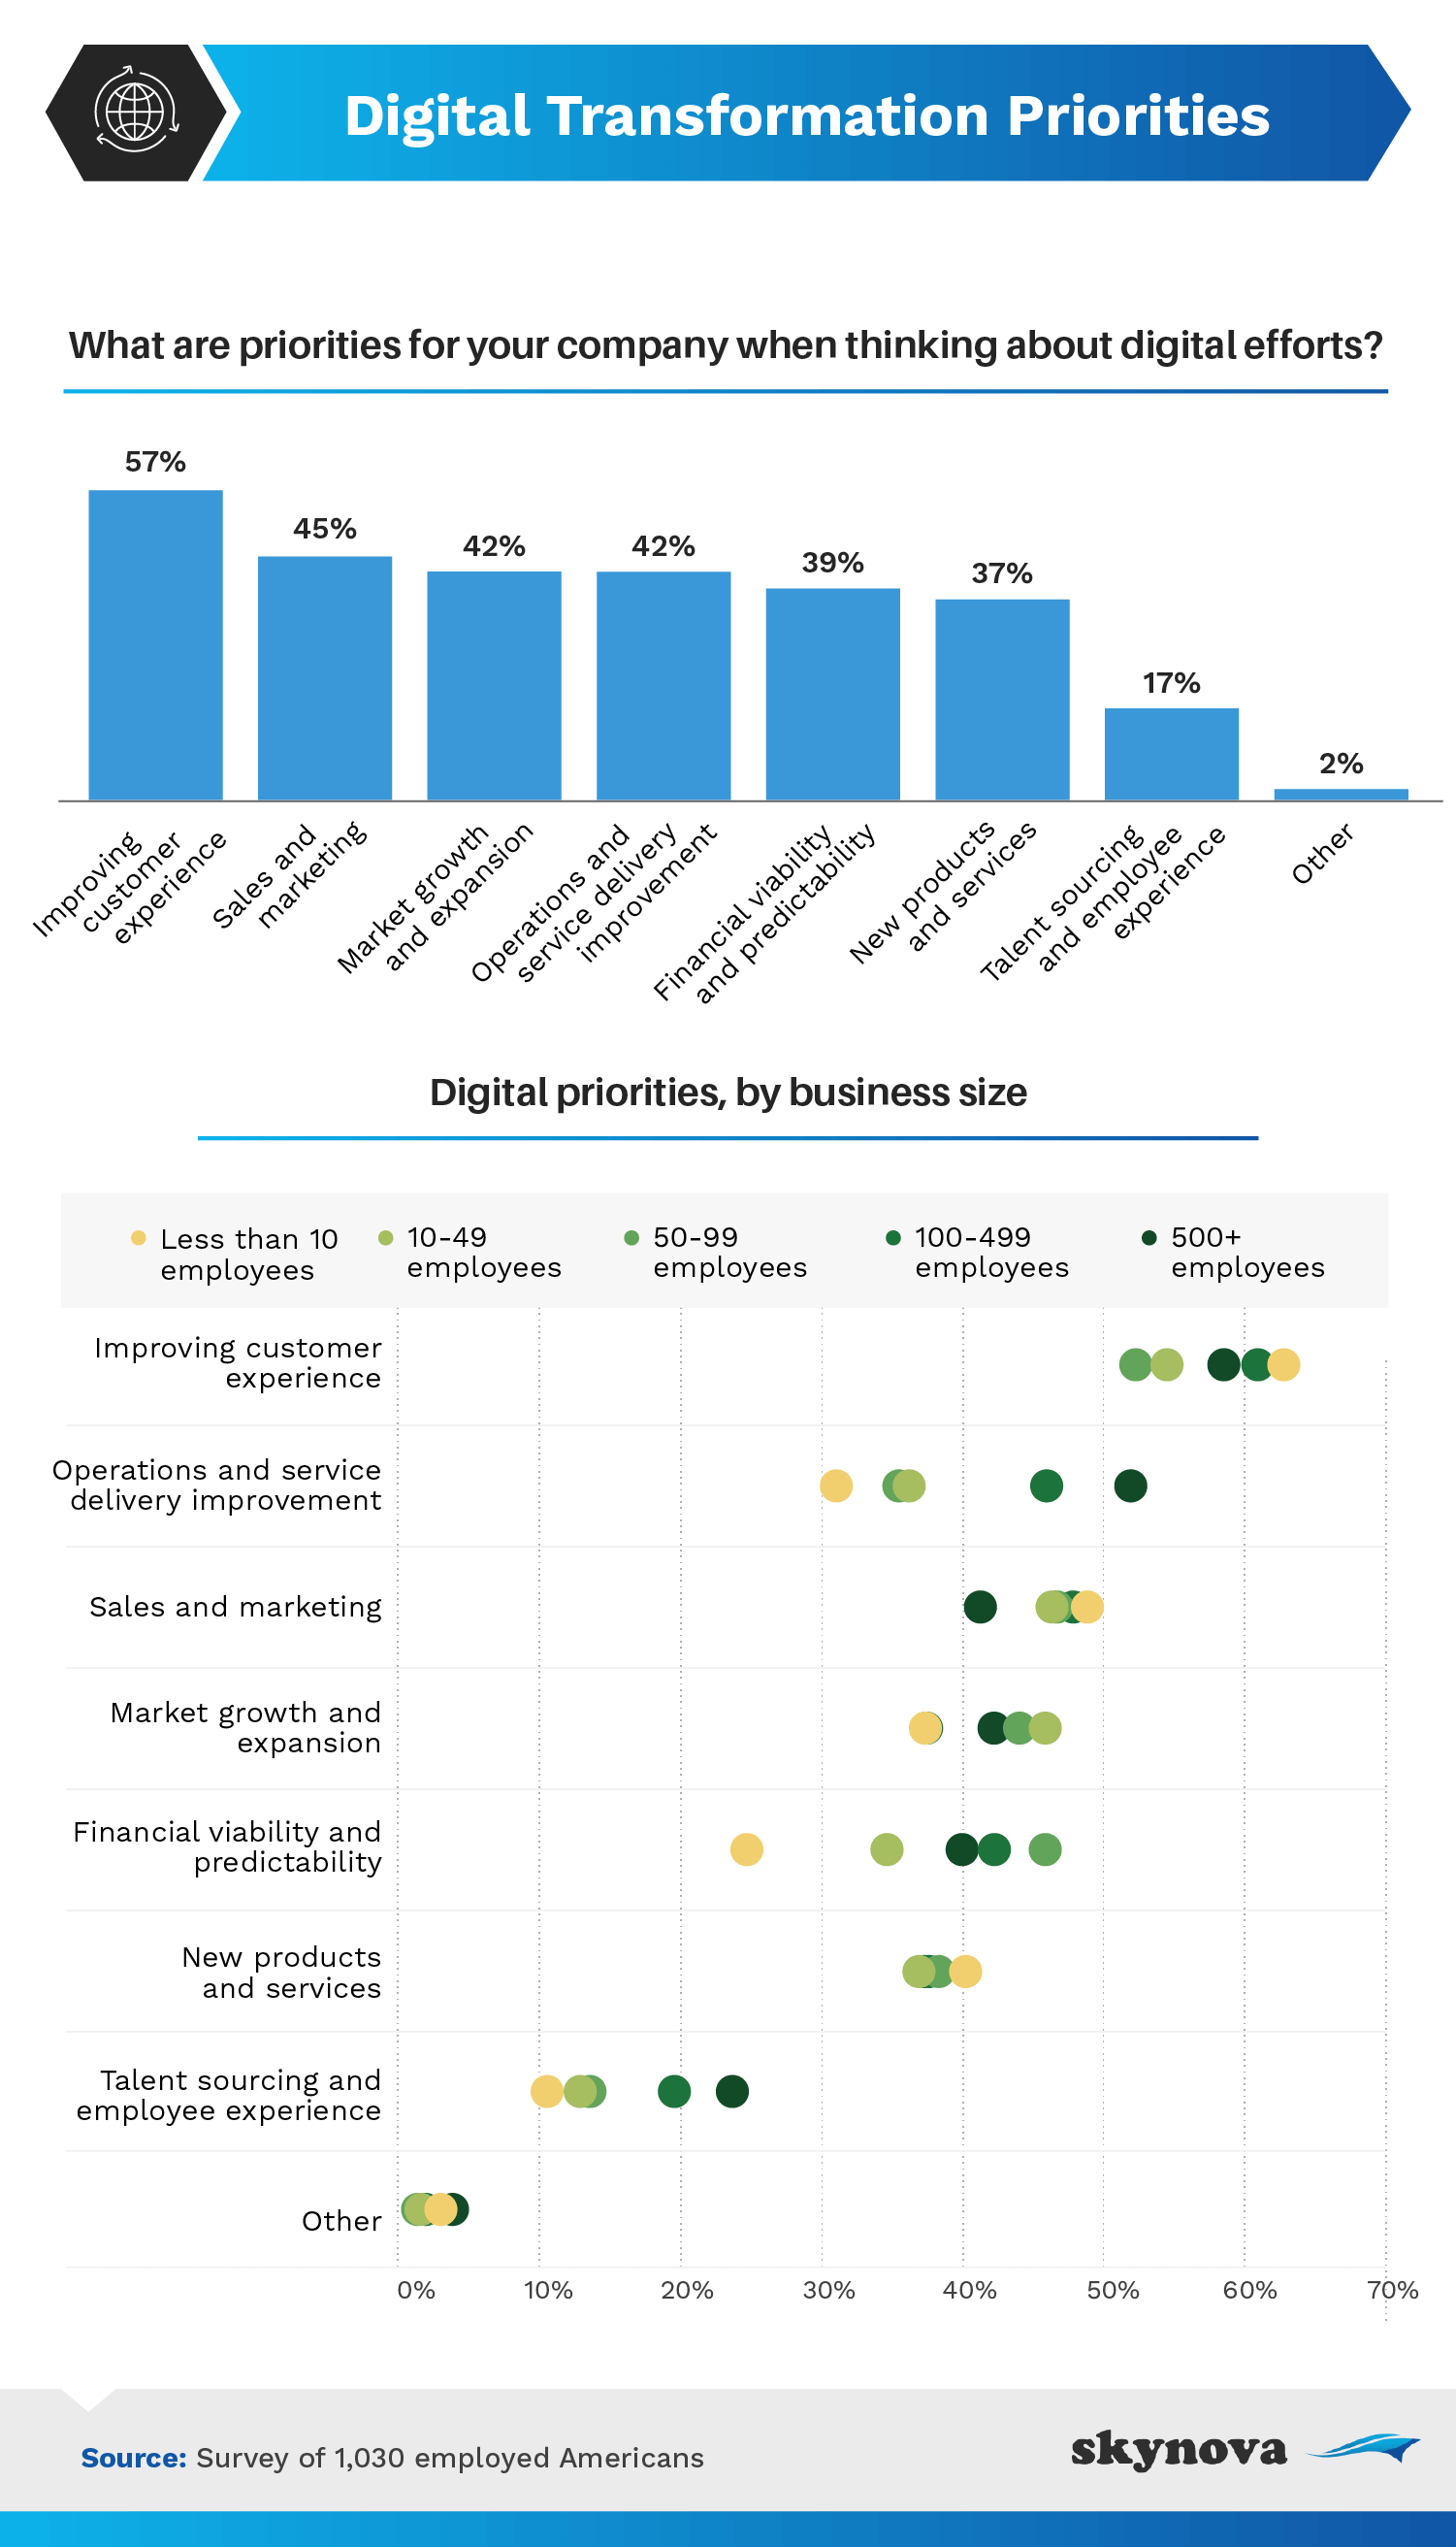 Digital priorities across businesses